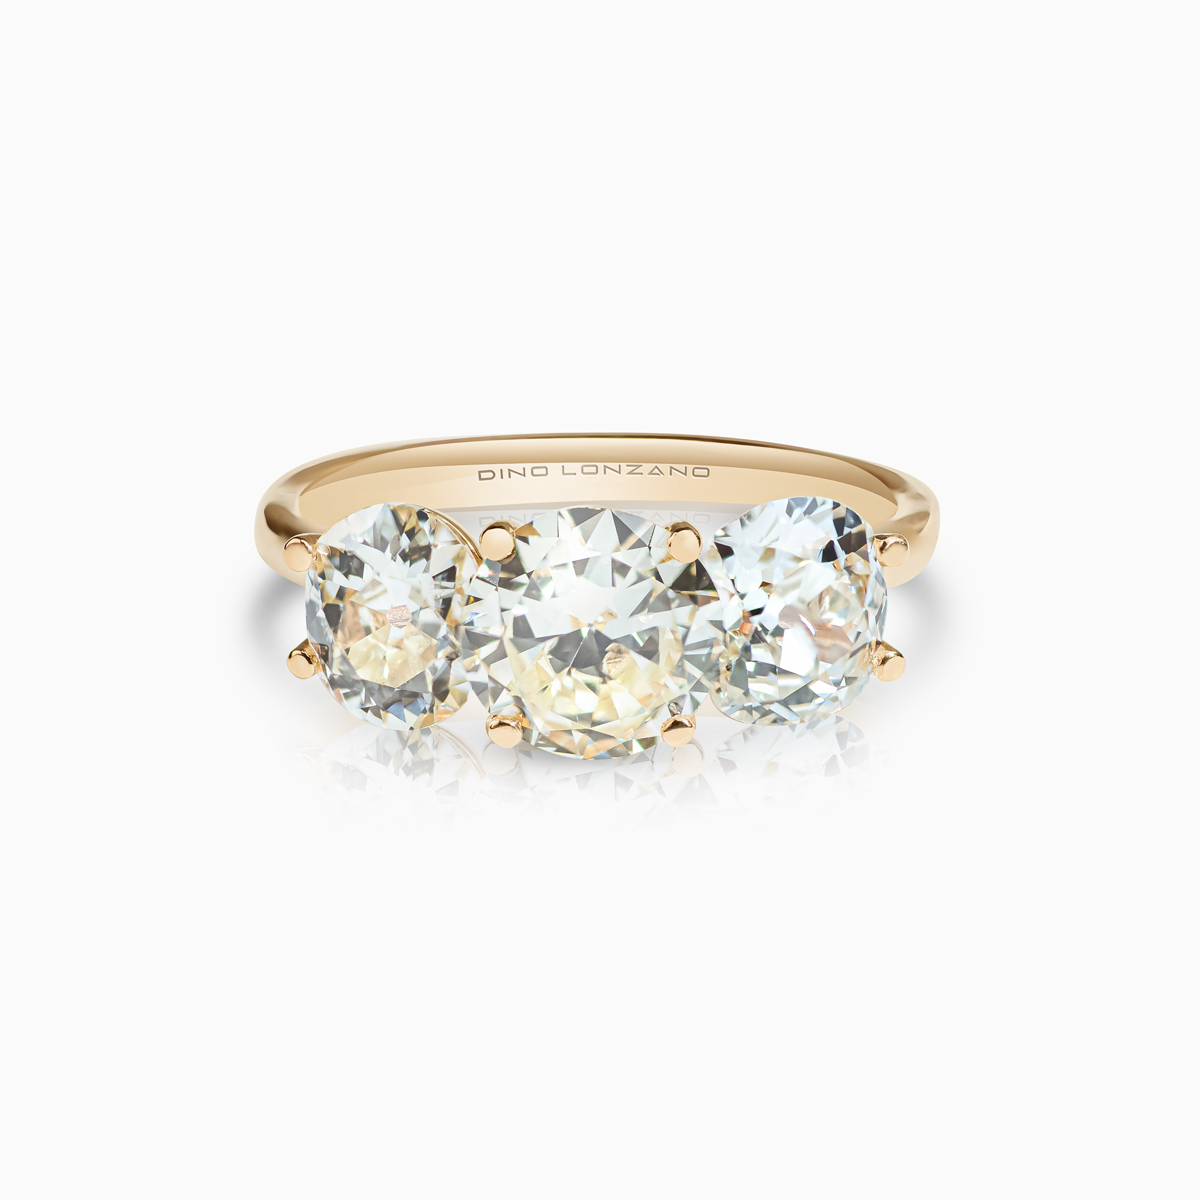 Three-Stone Vintage Cut Diamond Engagement Ring with Old Mine Cut Diamonds